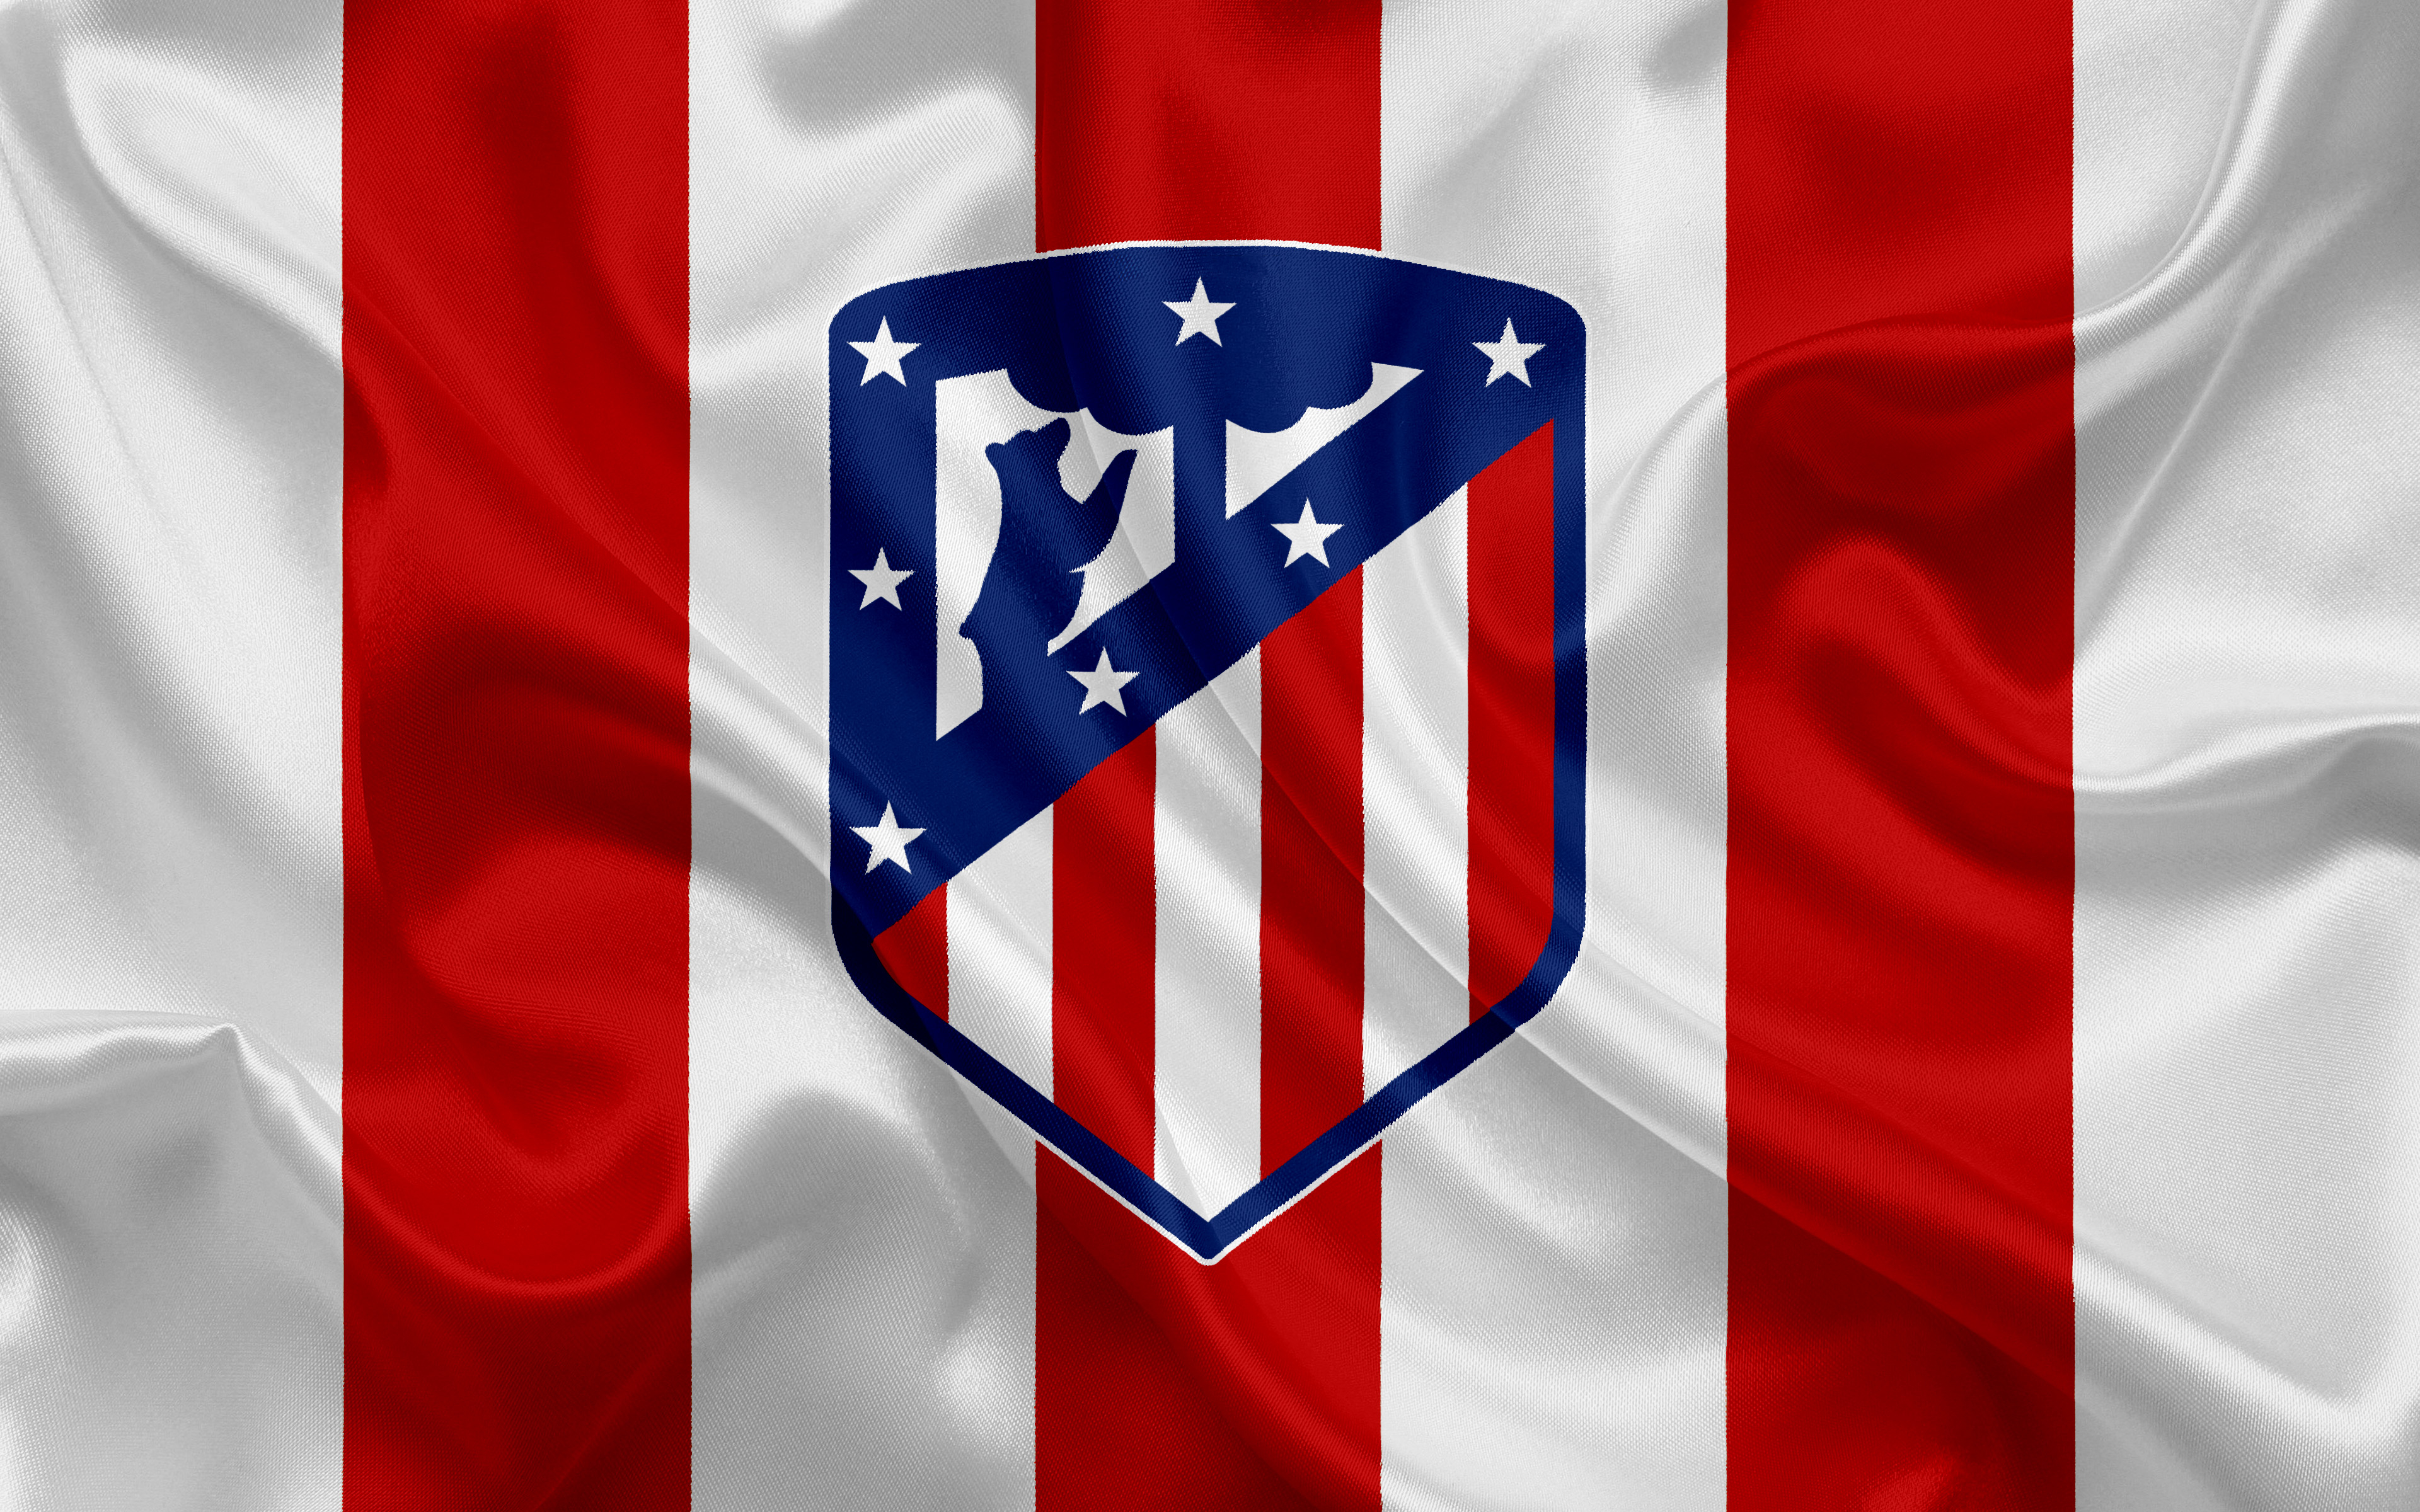 Sports Atlético Madrid HD Wallpaper | Background Image